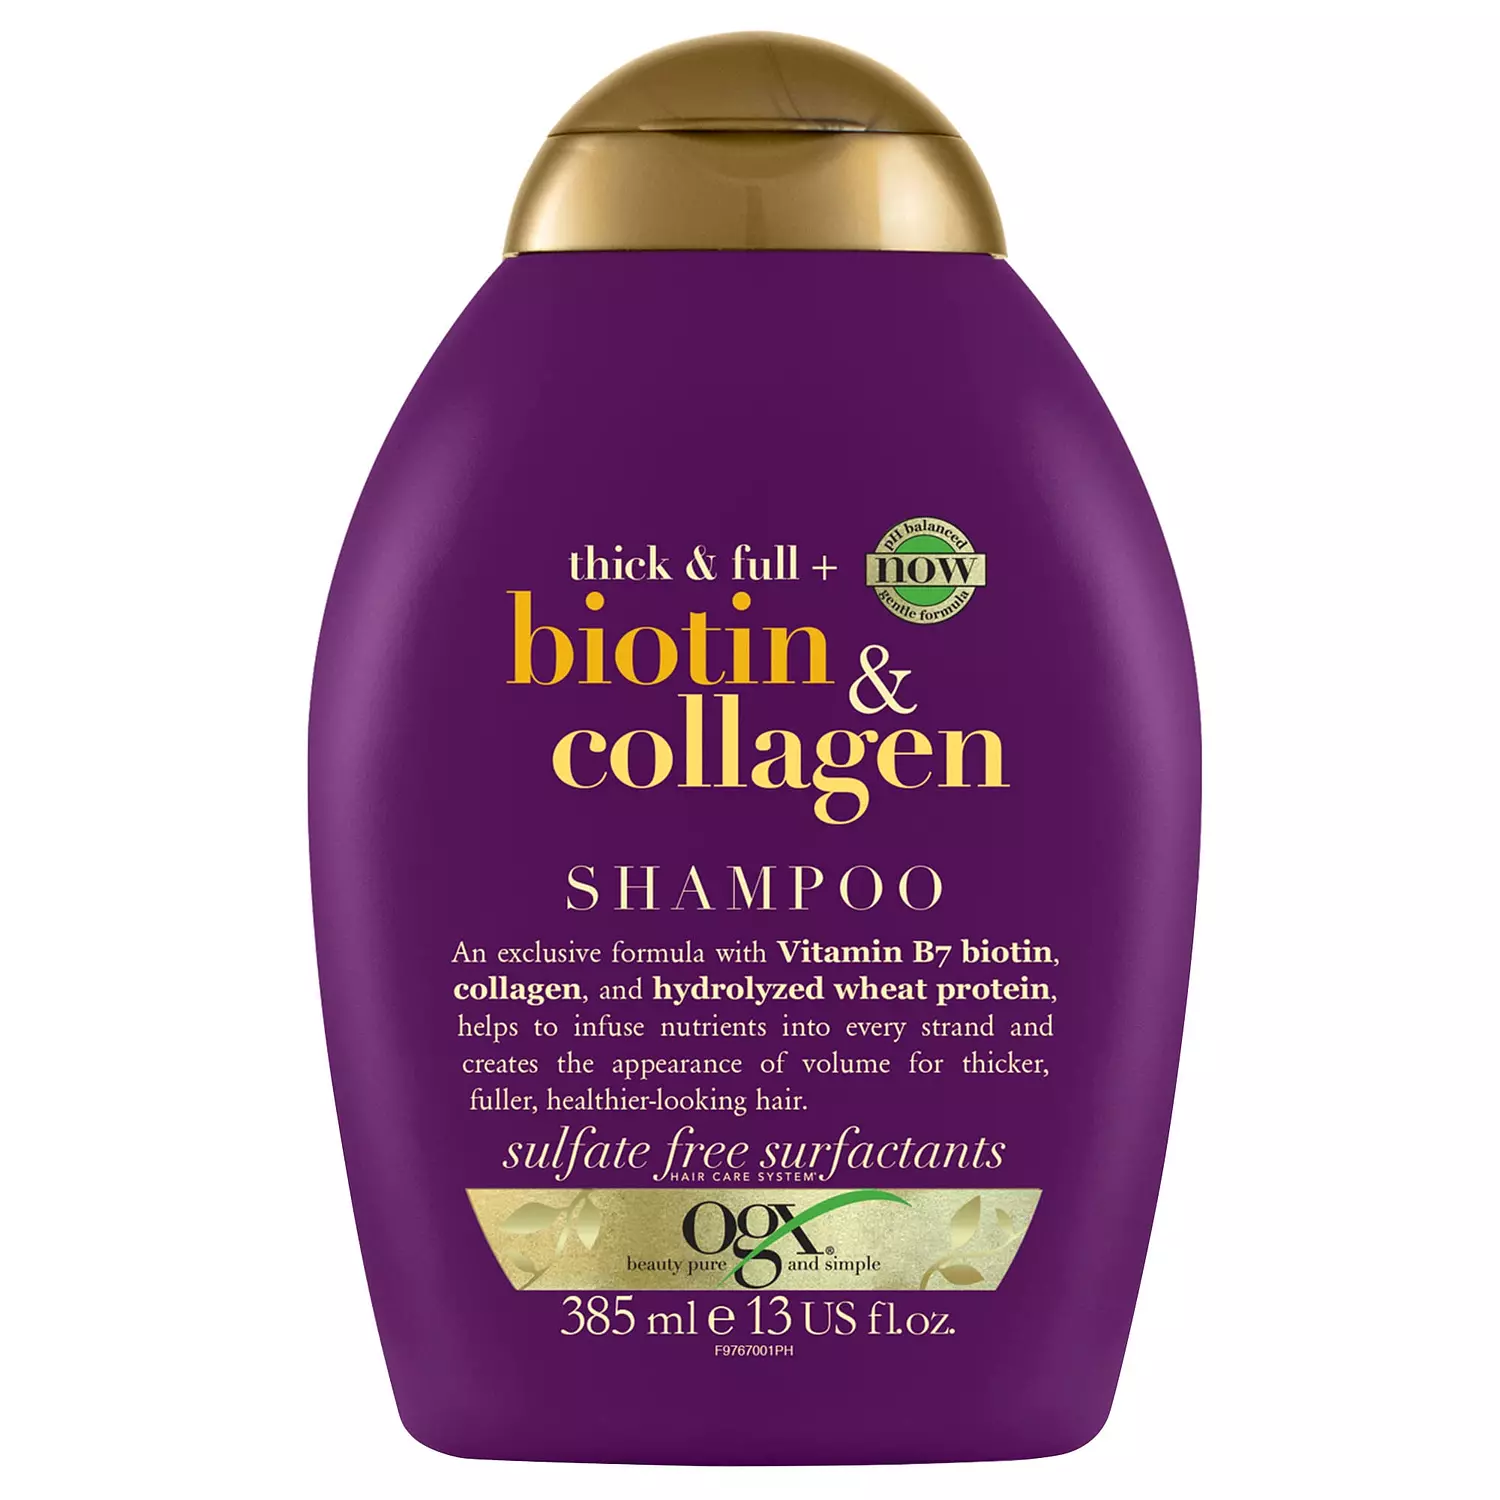 OGX Shampoo Thick & Full+ Biotin & Collagen New Gentle & PH Balanced Formula 385ml hover image